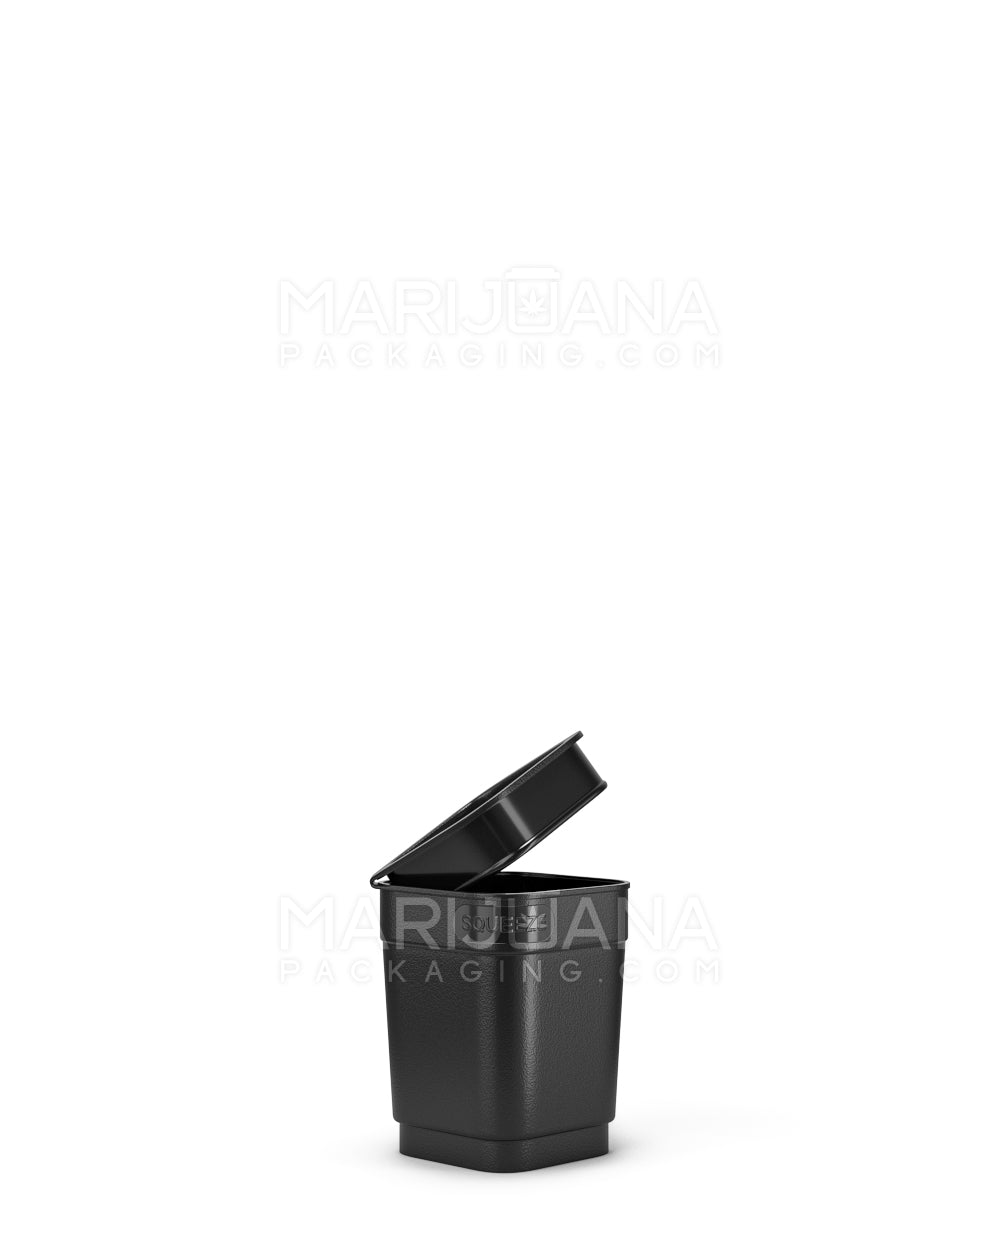 POLLEN GEAR 100% Recyclable Opaque Black Pop Box Pop Top Bottles | 6dr - 1g | Sample